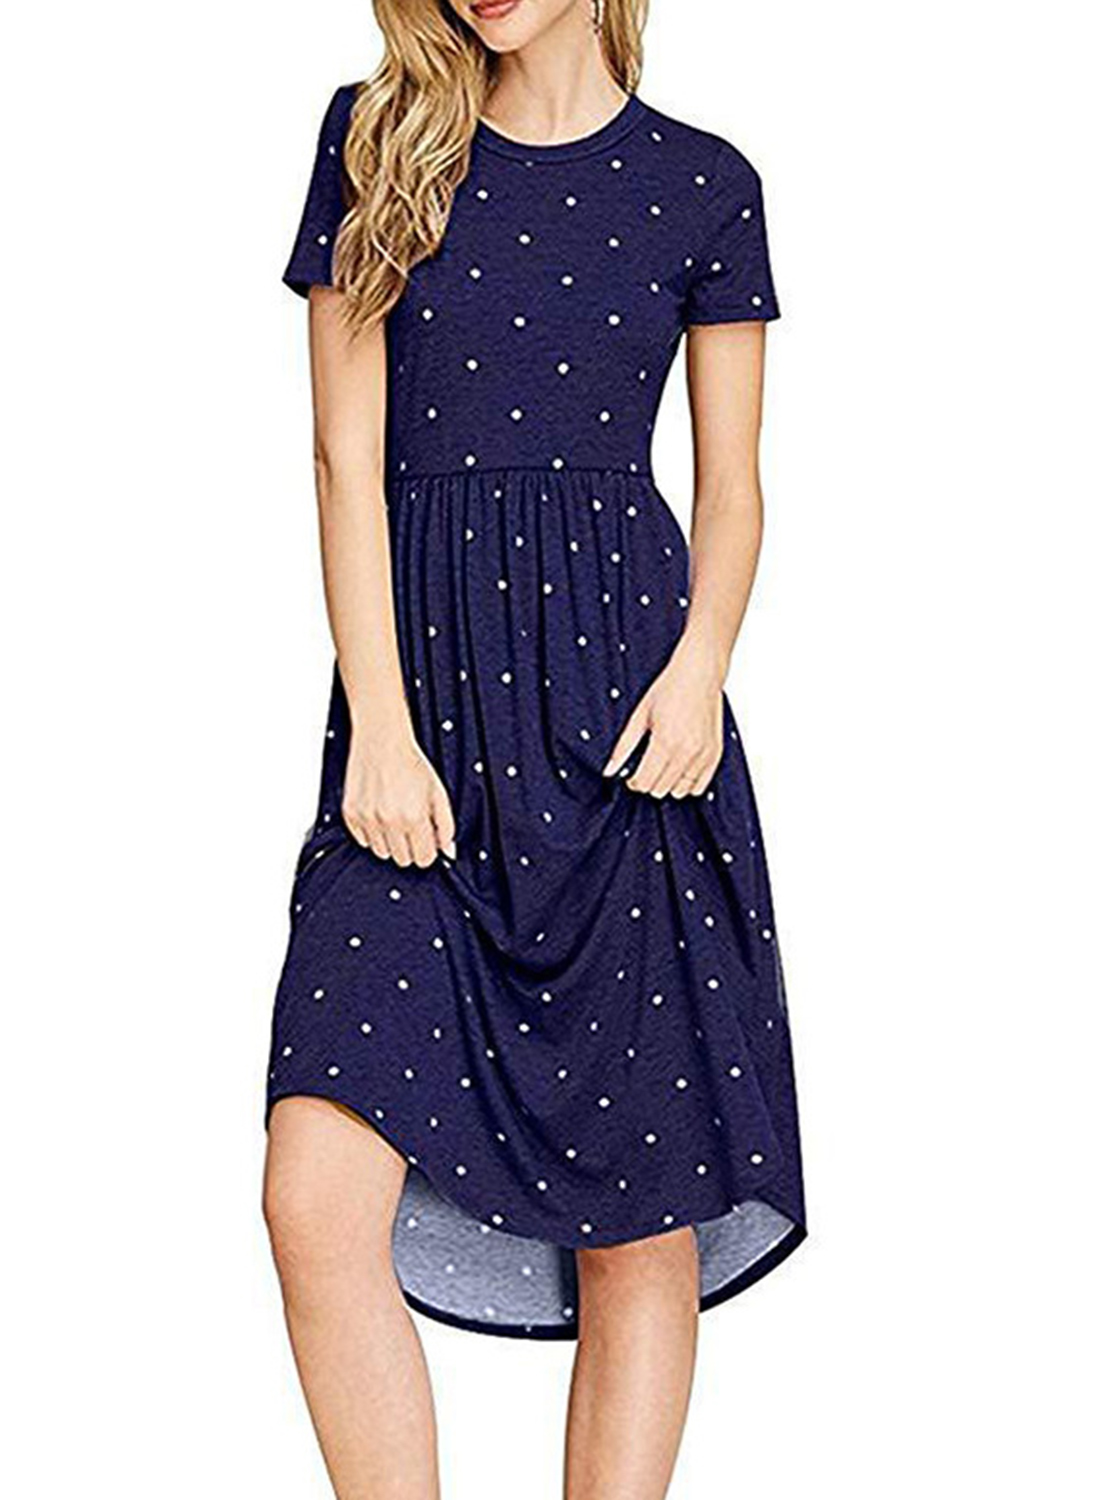 Navy Short Sleeve Polka Dot Elastic Knit Dress - STYLESIMO.com